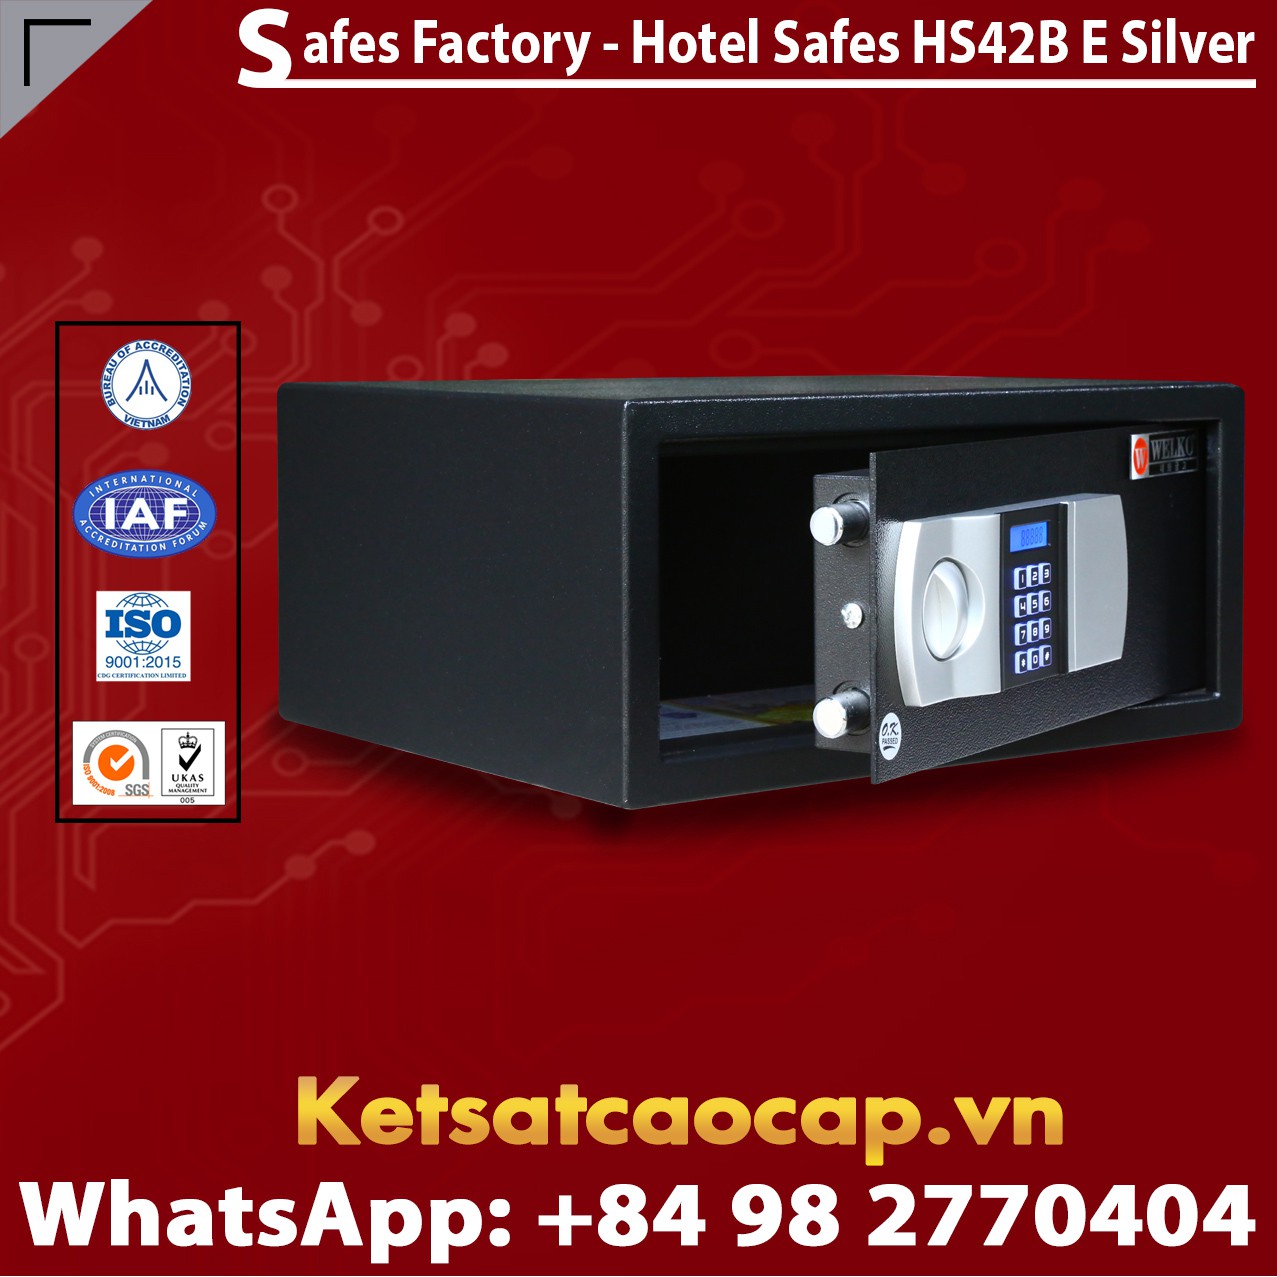 Safe in Hotel WELKO HS42 Black - E Silver